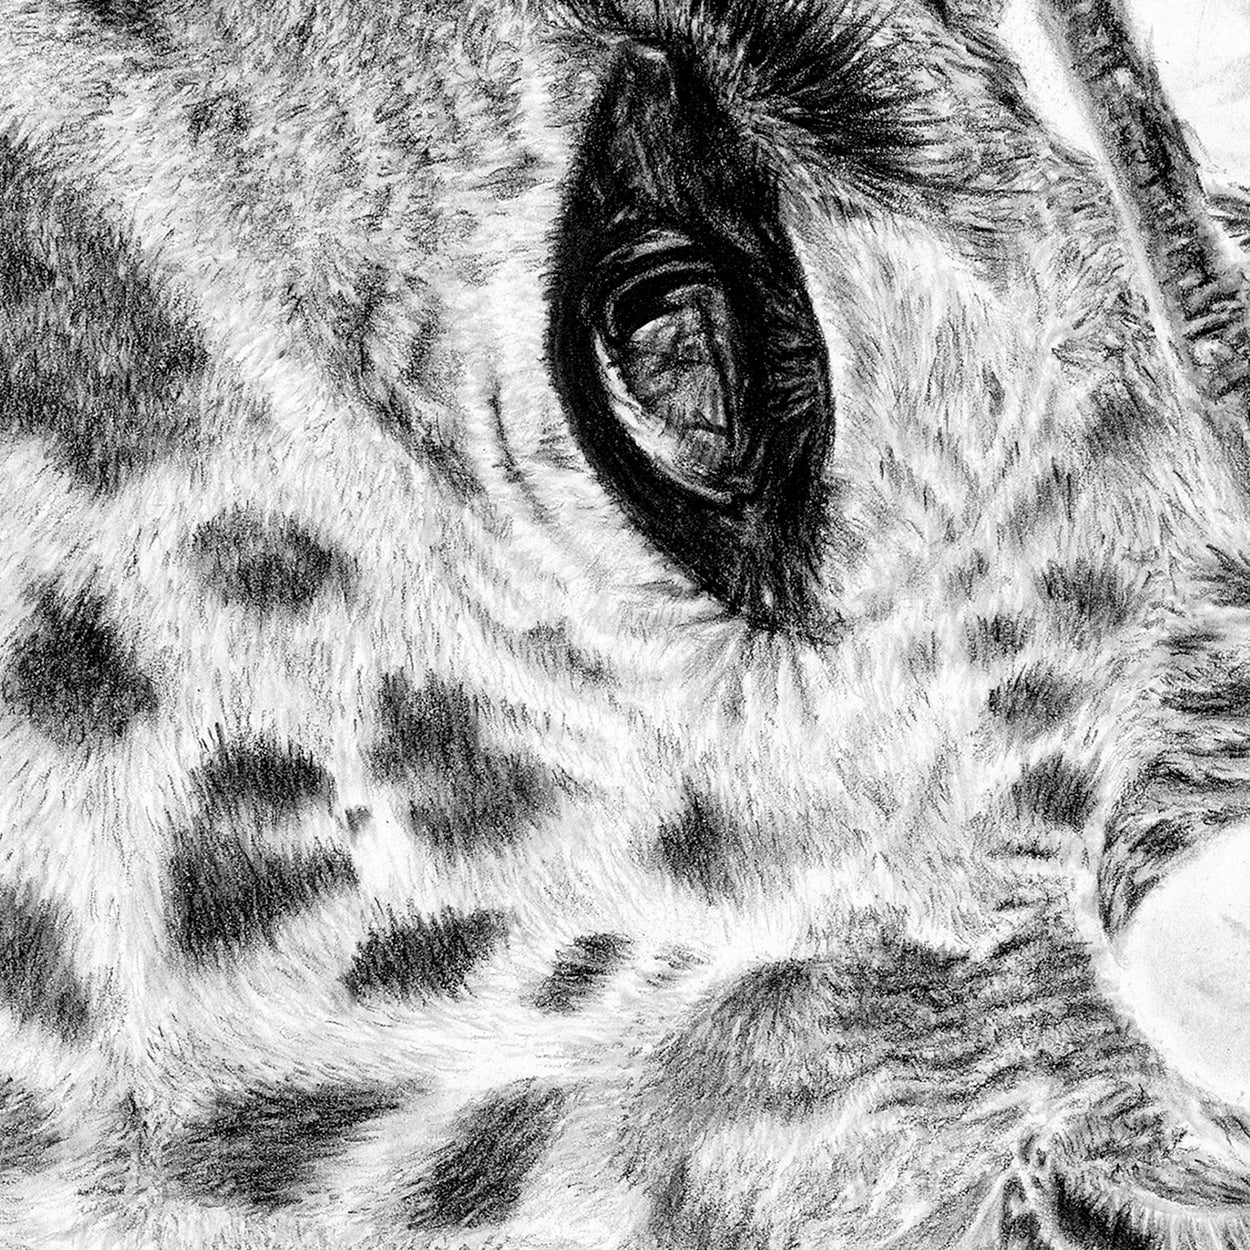 Giraffe Pencil Drawing Close-Up - The Thriving Wild